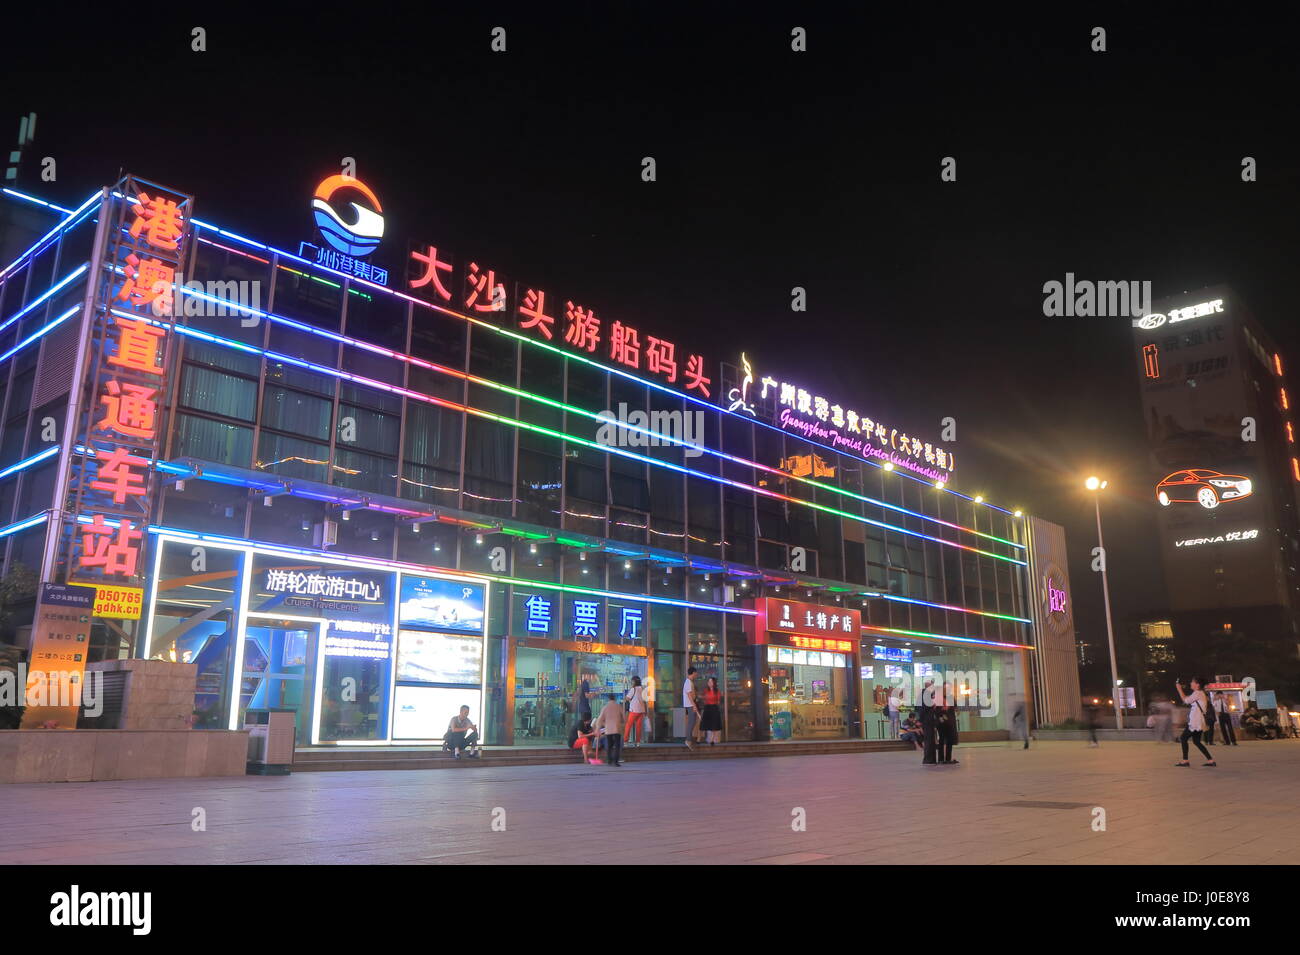 Personnes visitent Zhujiang river Dashatou cruise center à Guangzhou en Chine. Banque D'Images